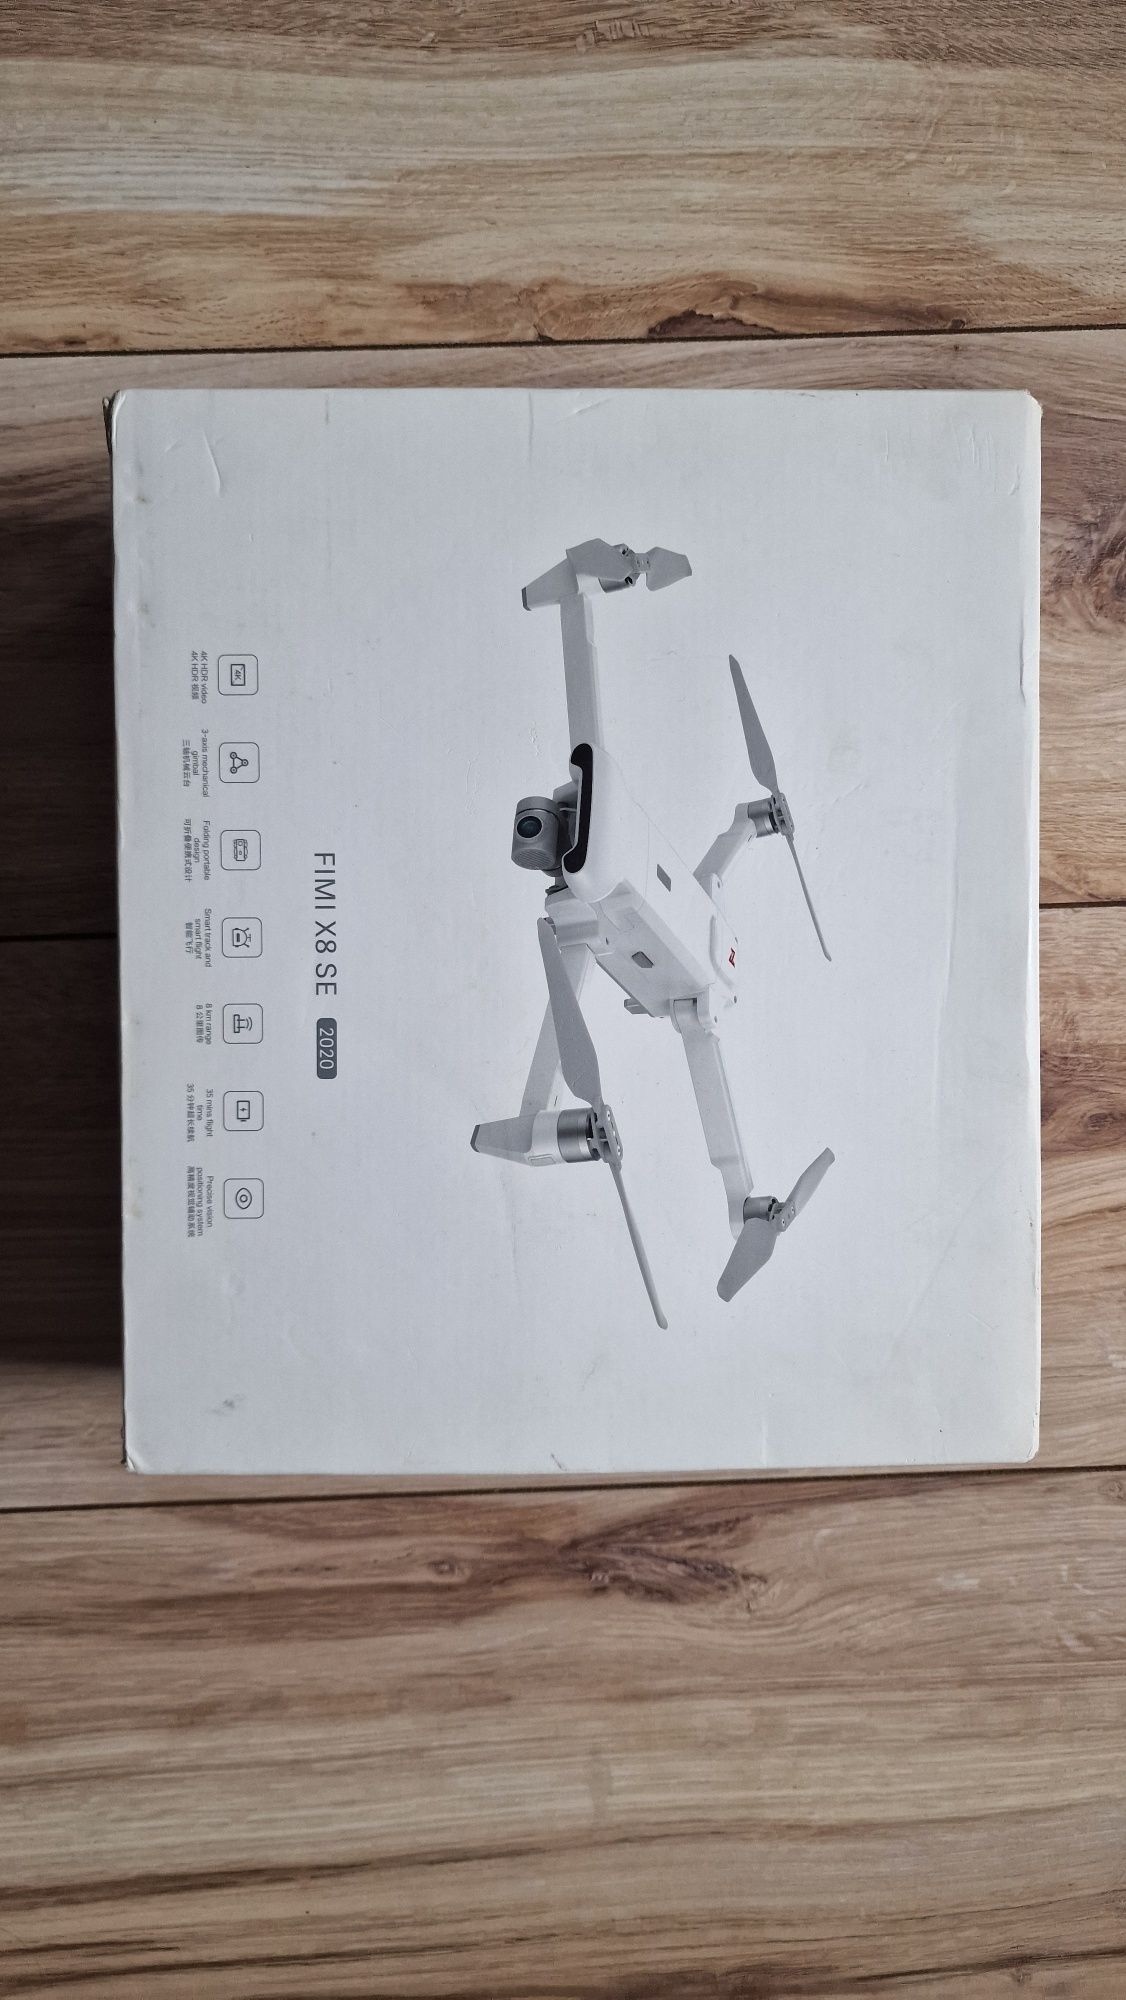 Dron Fimi X8 SE2020